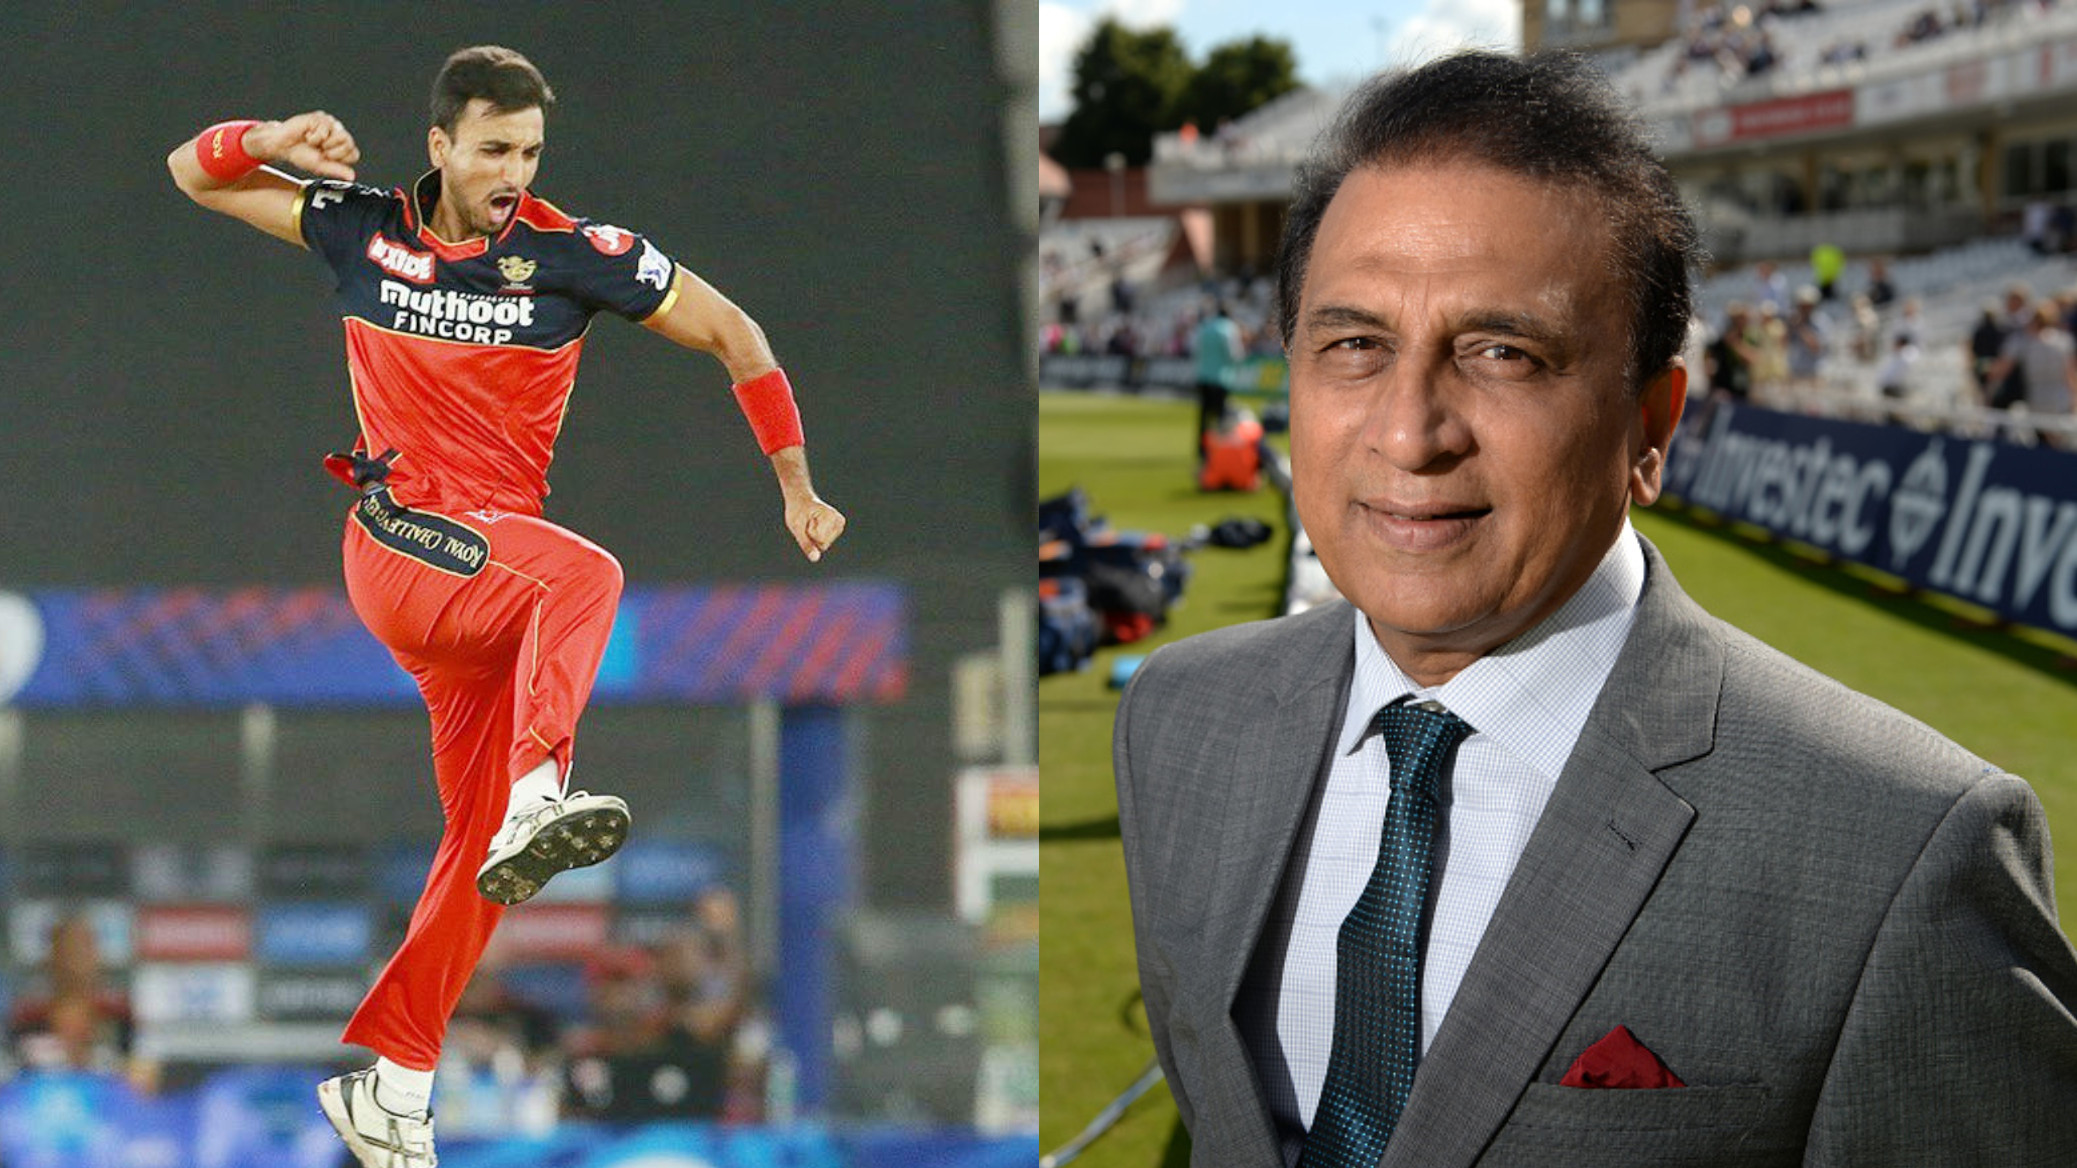 IPL 2022: “Harshal Patel deserves every single rupee he’s earned at IPL auction”: Sunil Gavaskar